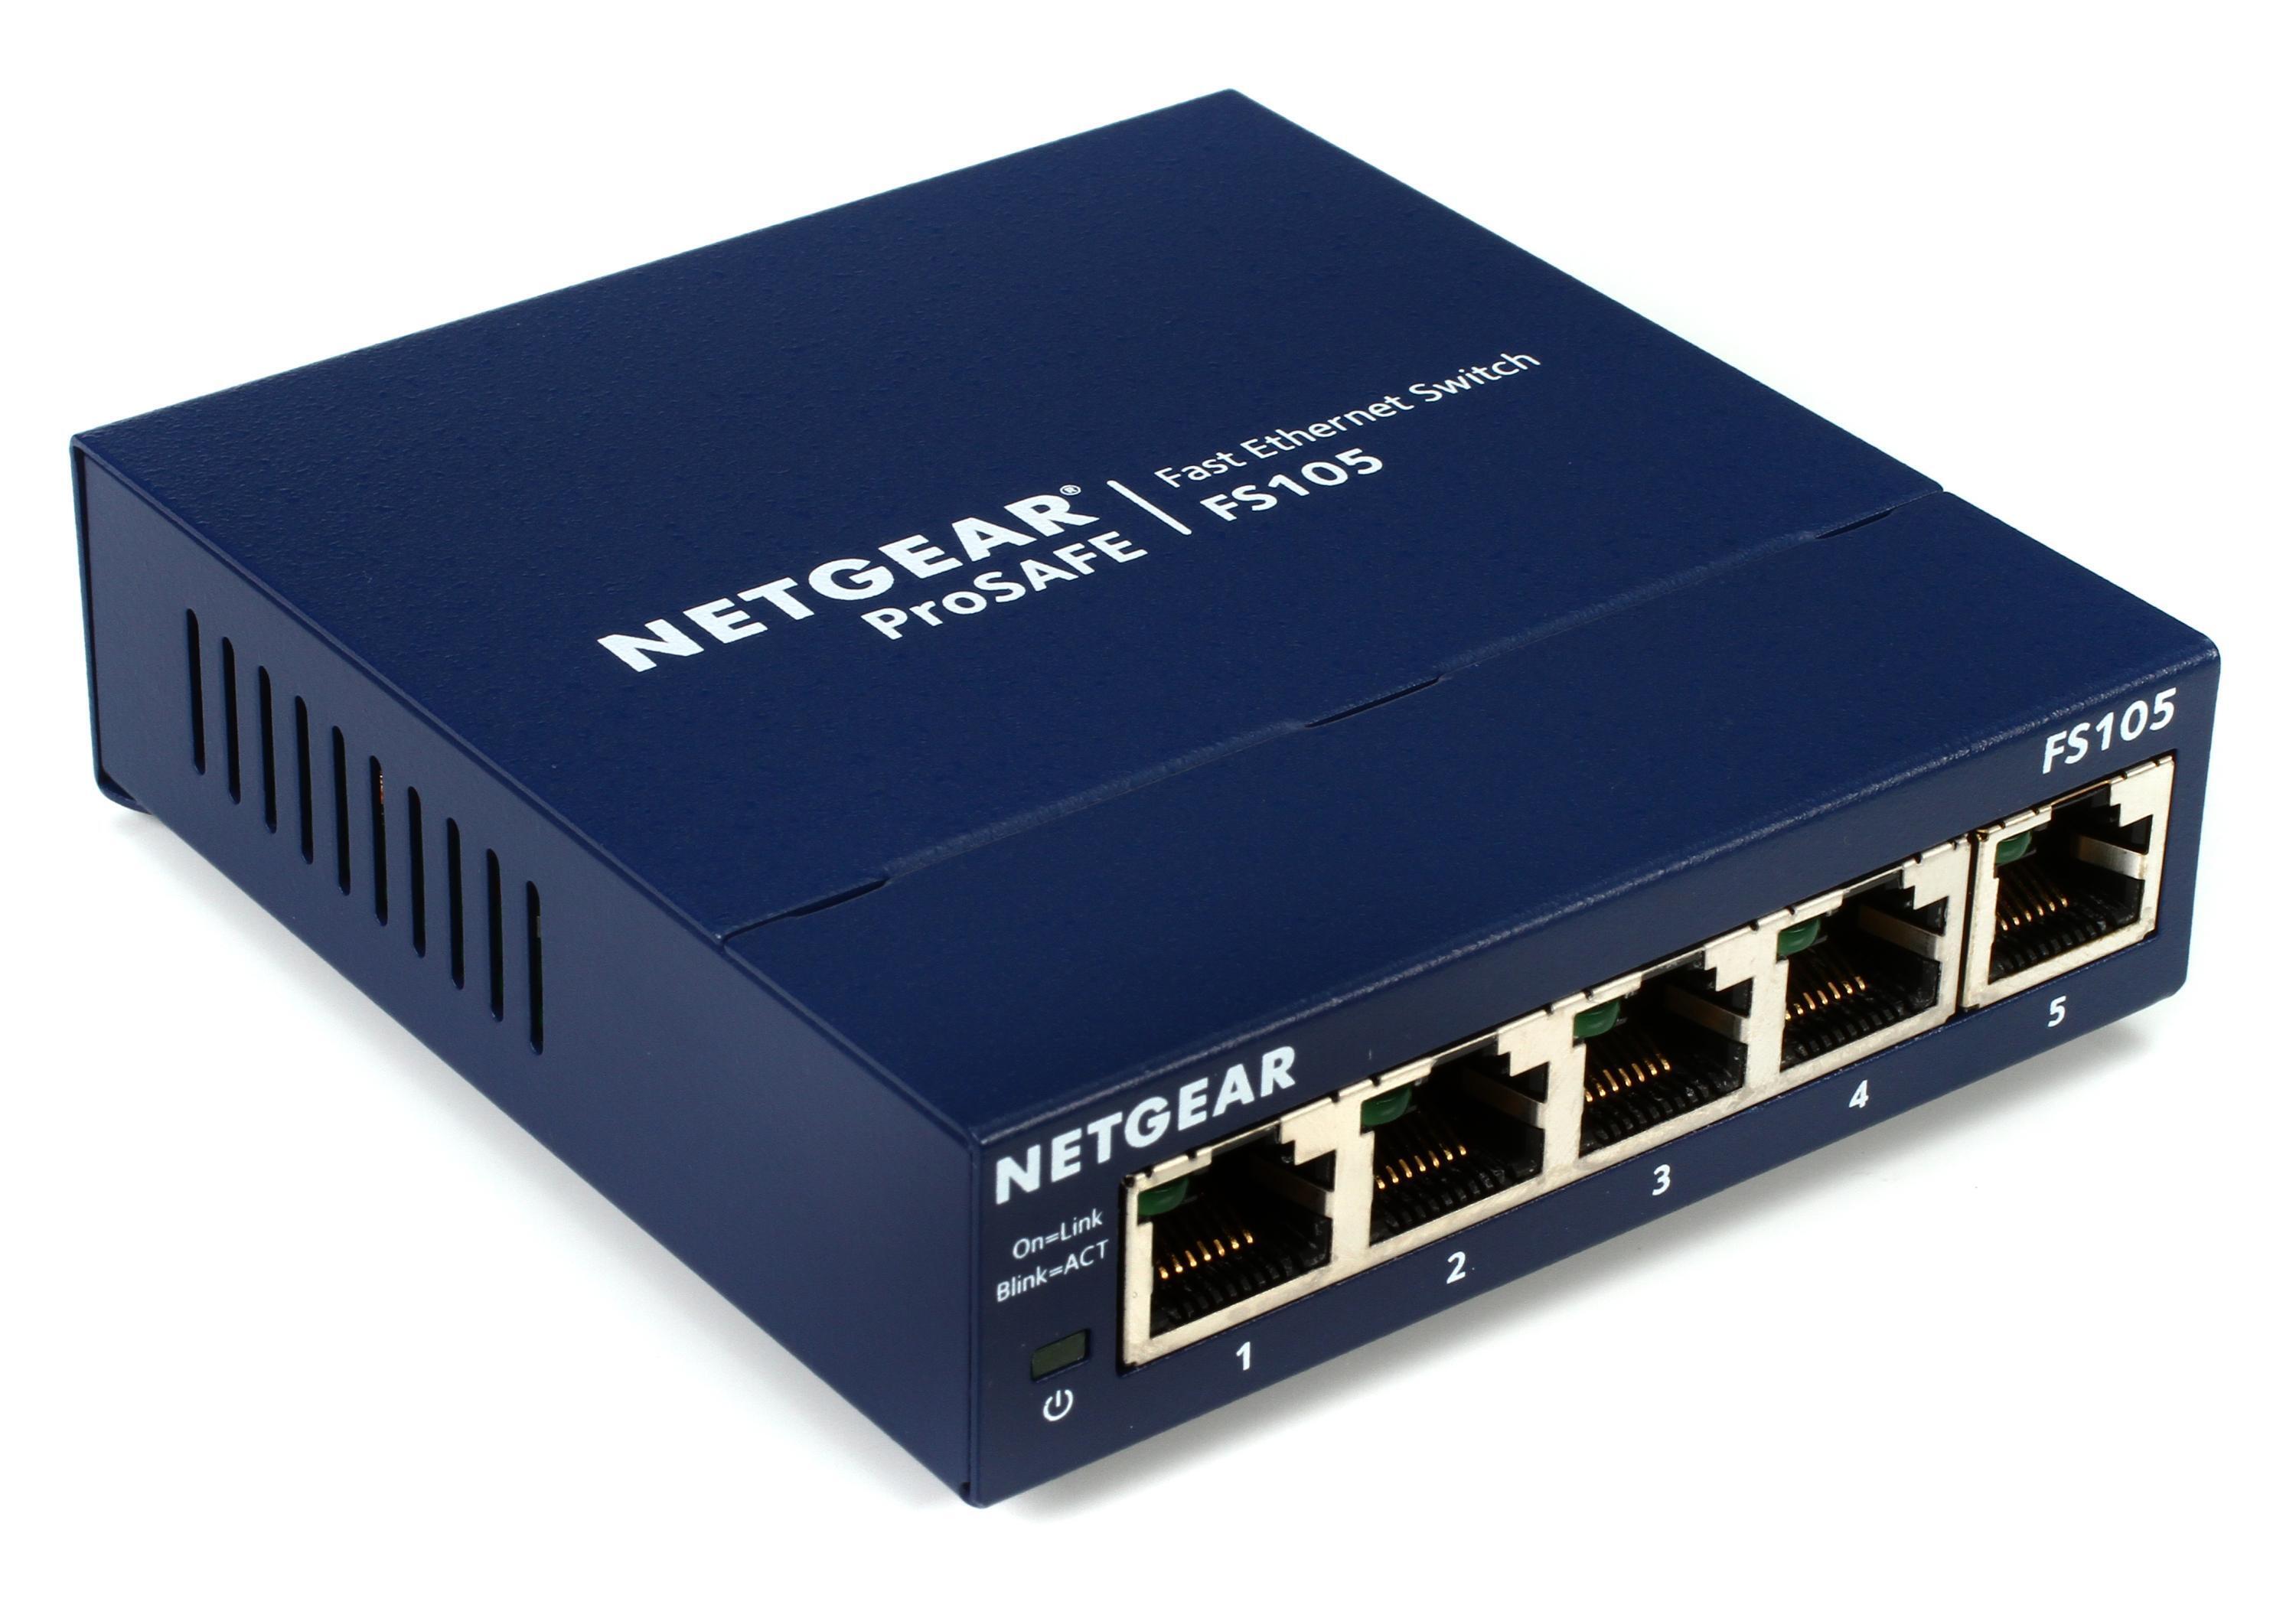 Available ports. Коммутатор Netgear fs105. Netgear <fs105 5-Port PROSAFE. Коммутатор 5 портовый d-link 10/100 5-Port UTP 10/100 fast Ethernet. Коммутатор 5-Port 10/100мб.